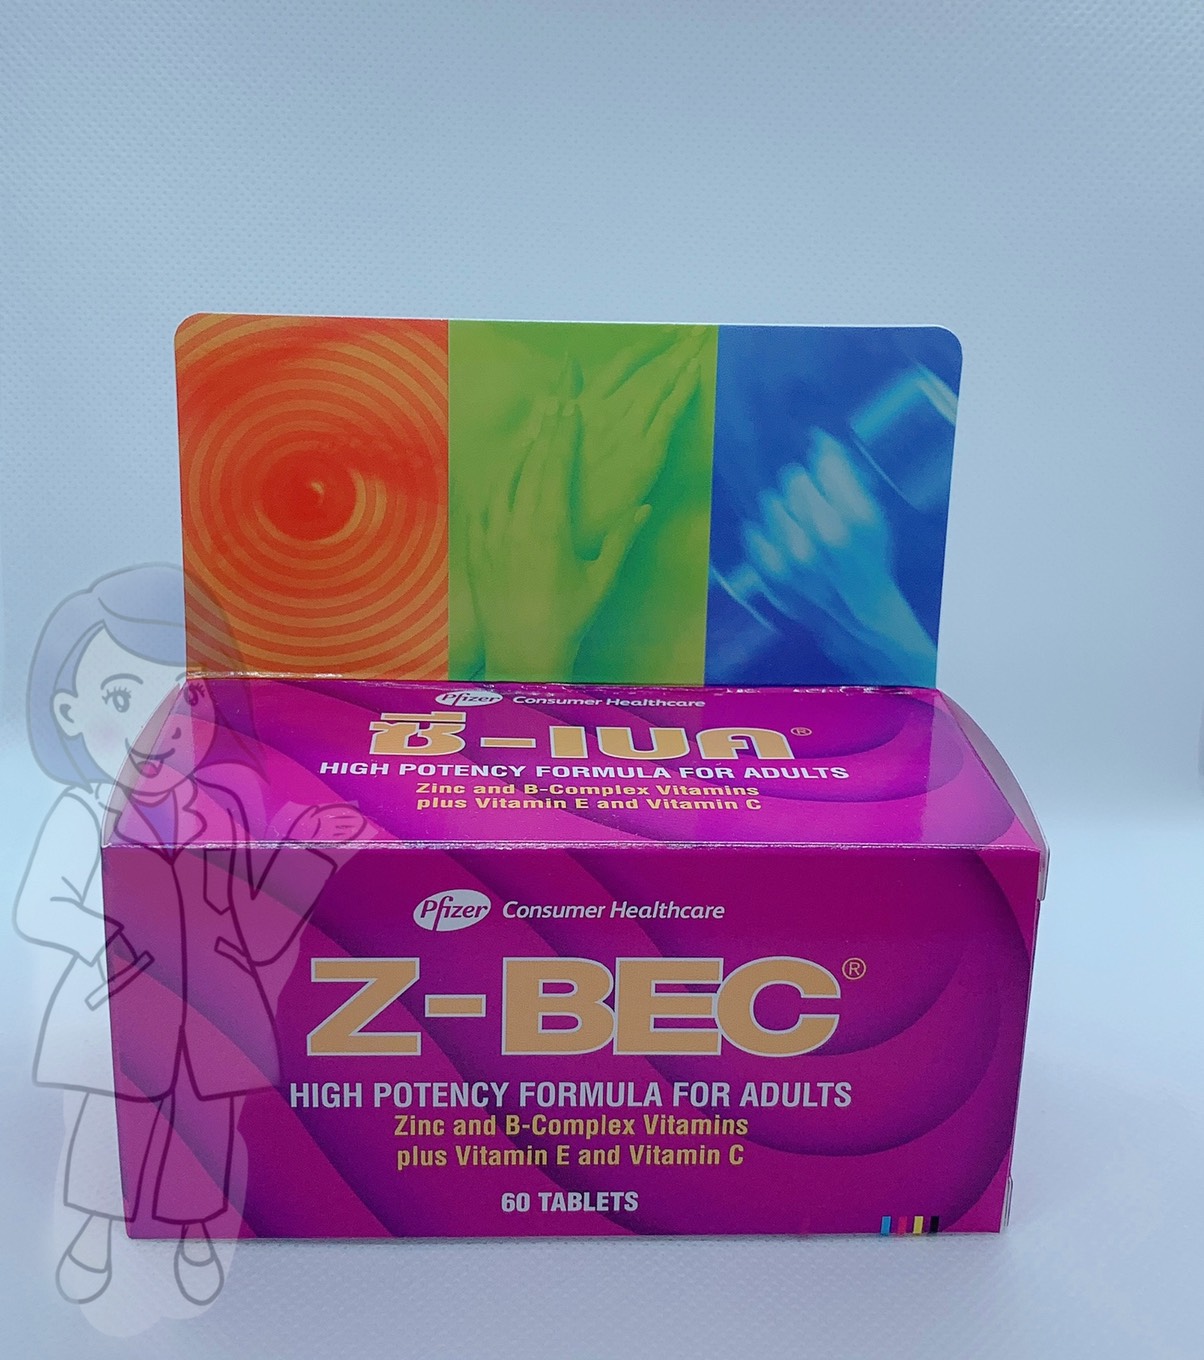 (60 tablets) Z-Bec ซีเบคเป็นวิตามิน B-Complex และมีวิตามิน C, B, Folic Acid, และ Zinc